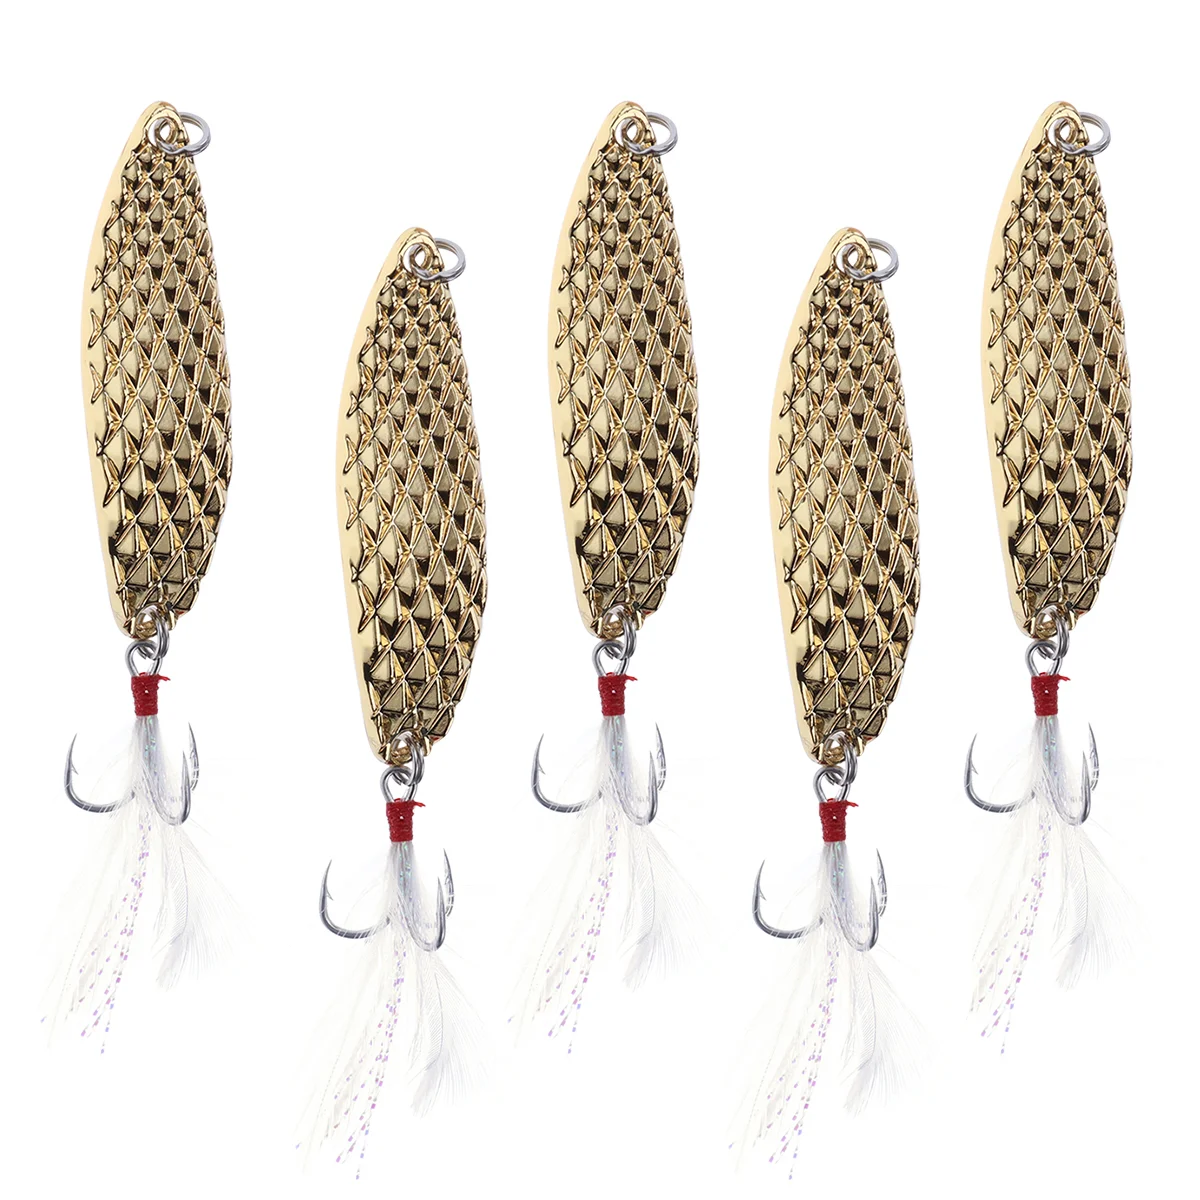 

5pcs Spoons Hard Fishing Lures Treble Hooks Metal Fishing Lure Baits Fishing Accessories (Golden Lure + White )